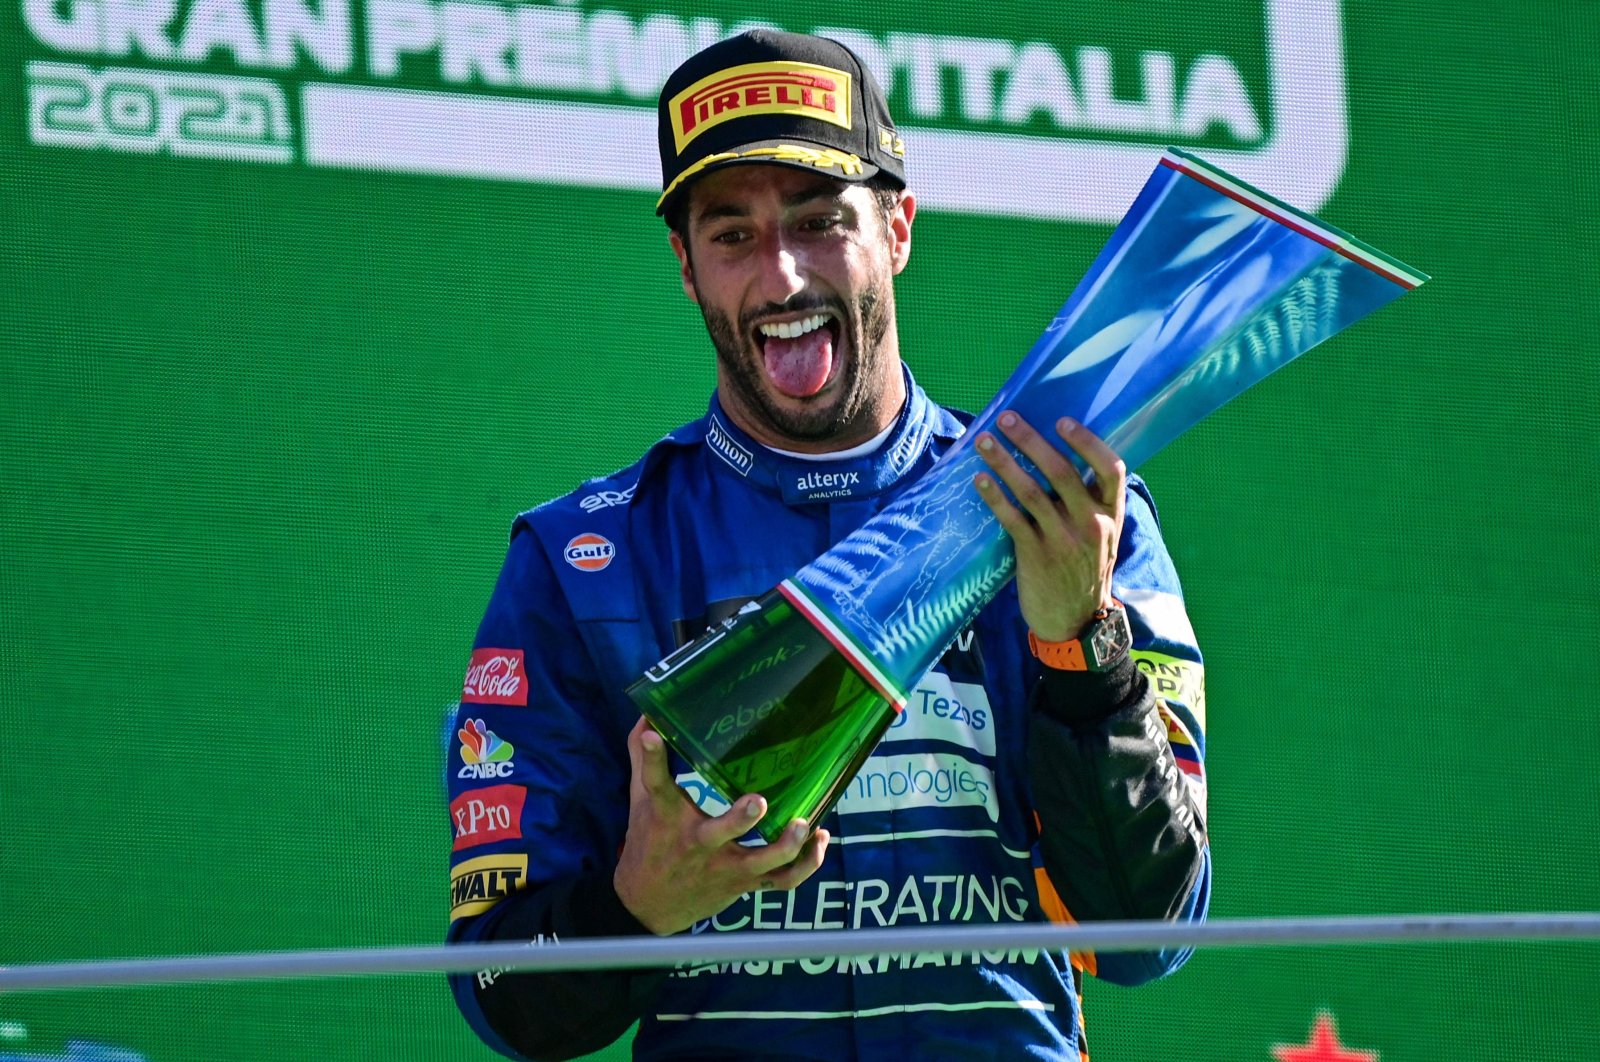 McLaren's Australian driver Daniel Ricciardo celebrates winning the Italian Formula One Grand Prix at the Autodromo Nazionale circuit in Monza, Italy, Sept. 12, 2021. (AFP Photo)